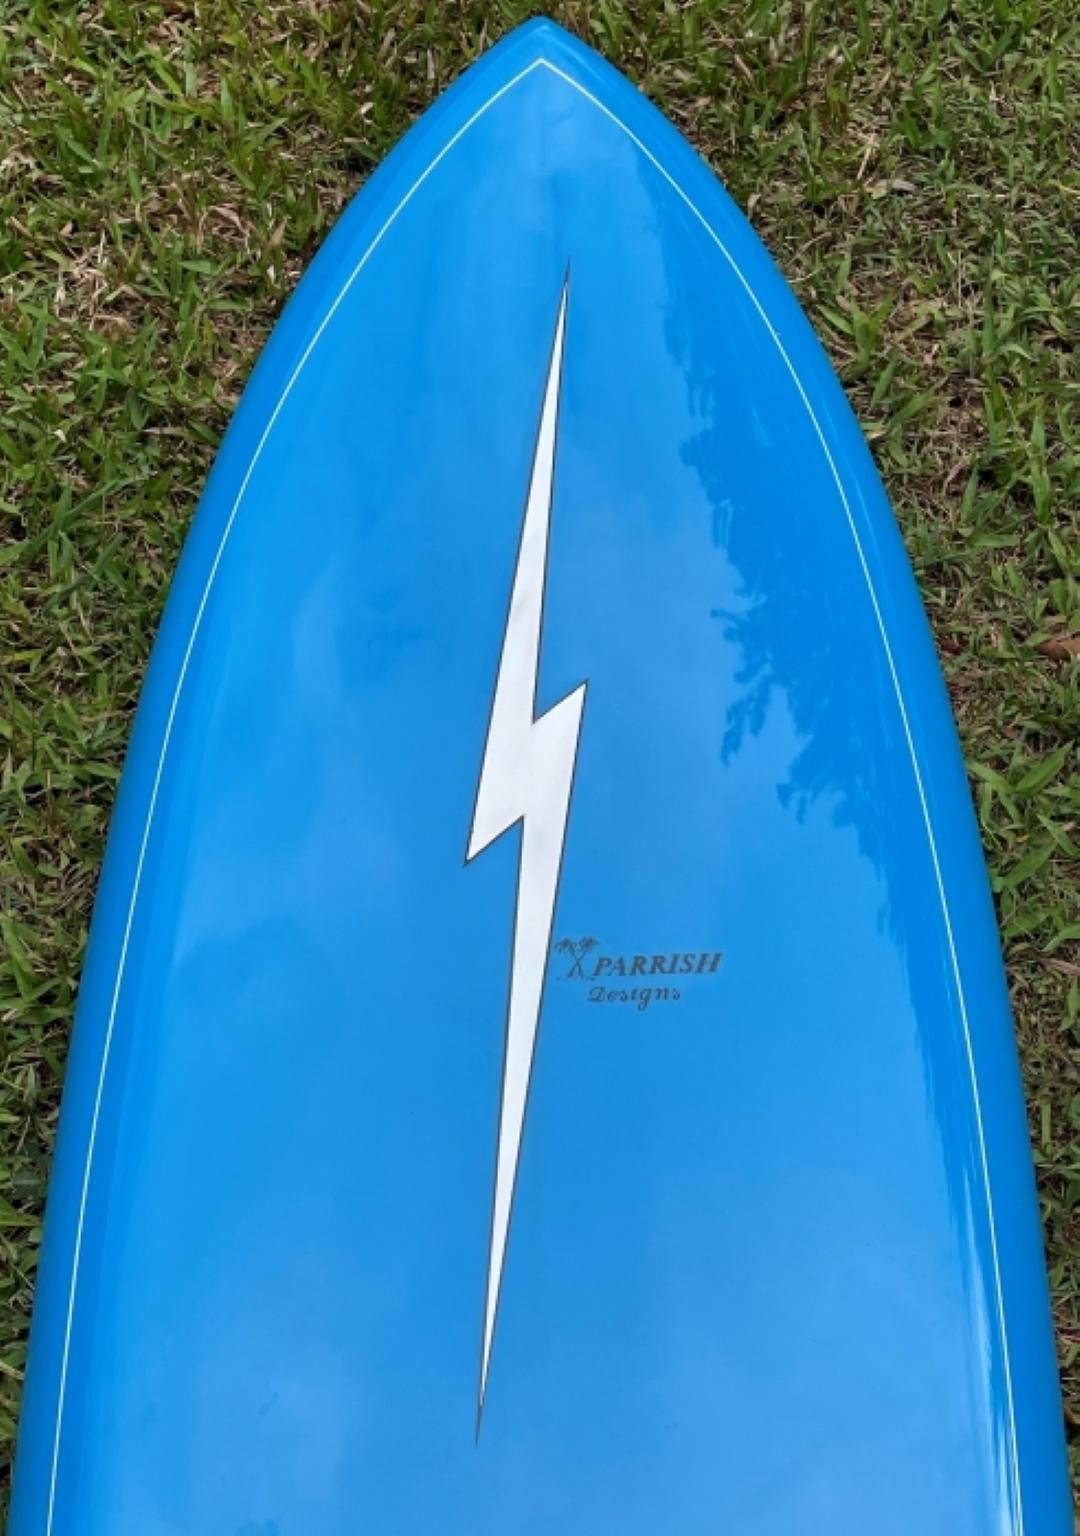 tom parrish surfboards